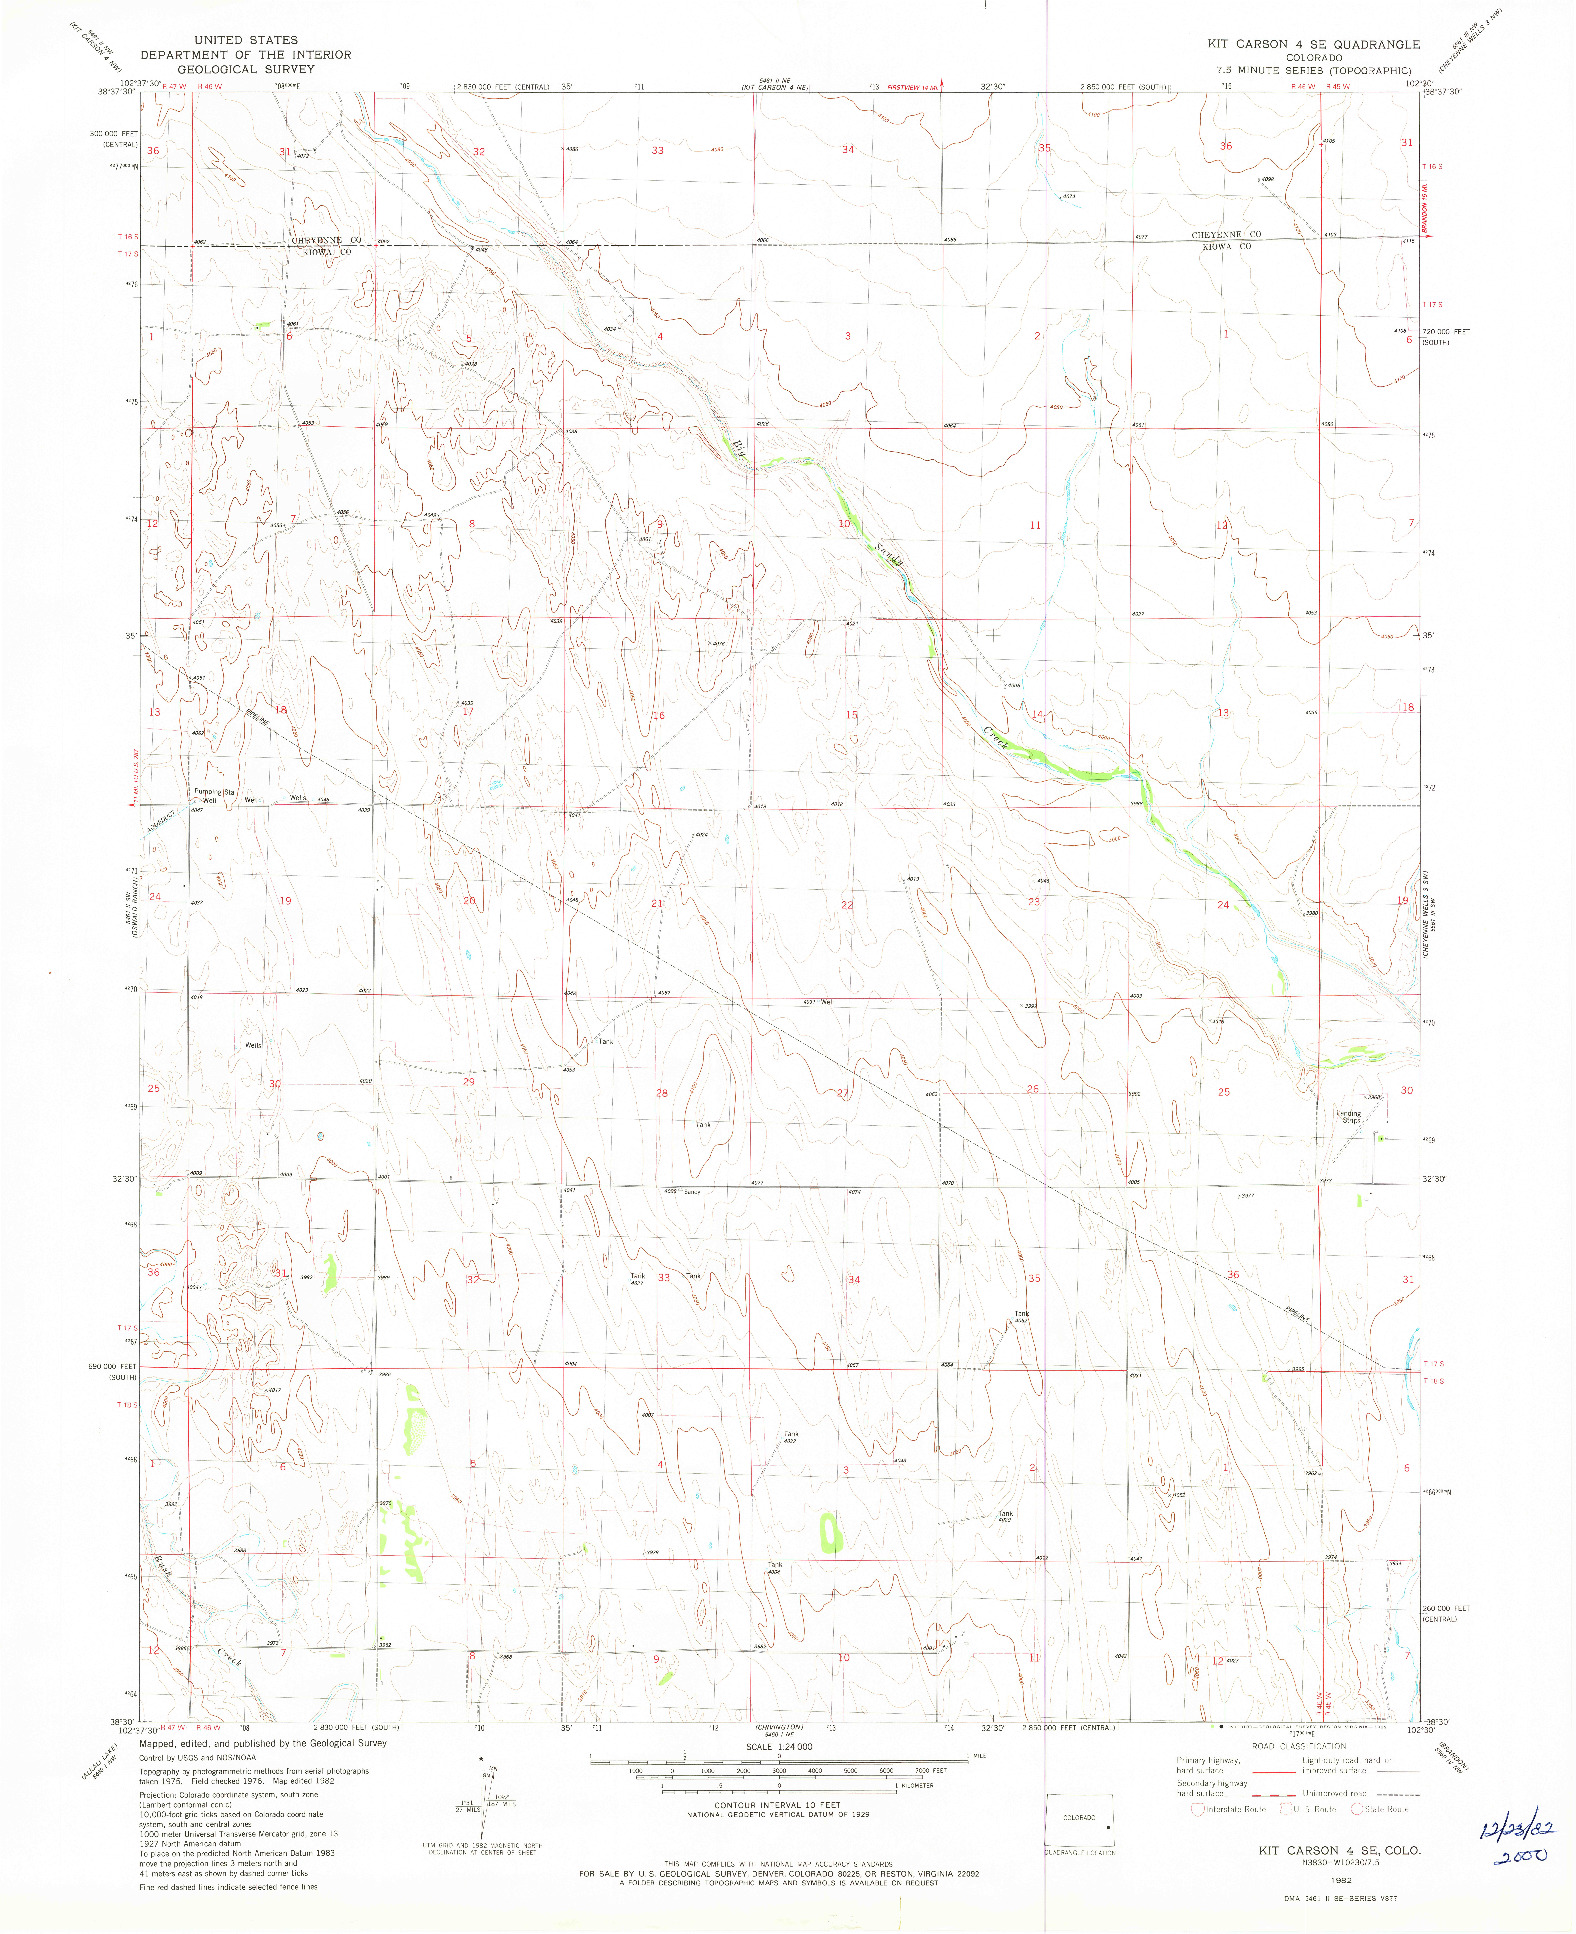 USGS 1:24000-SCALE QUADRANGLE FOR KIT CARSON 4 SE, CO 1982